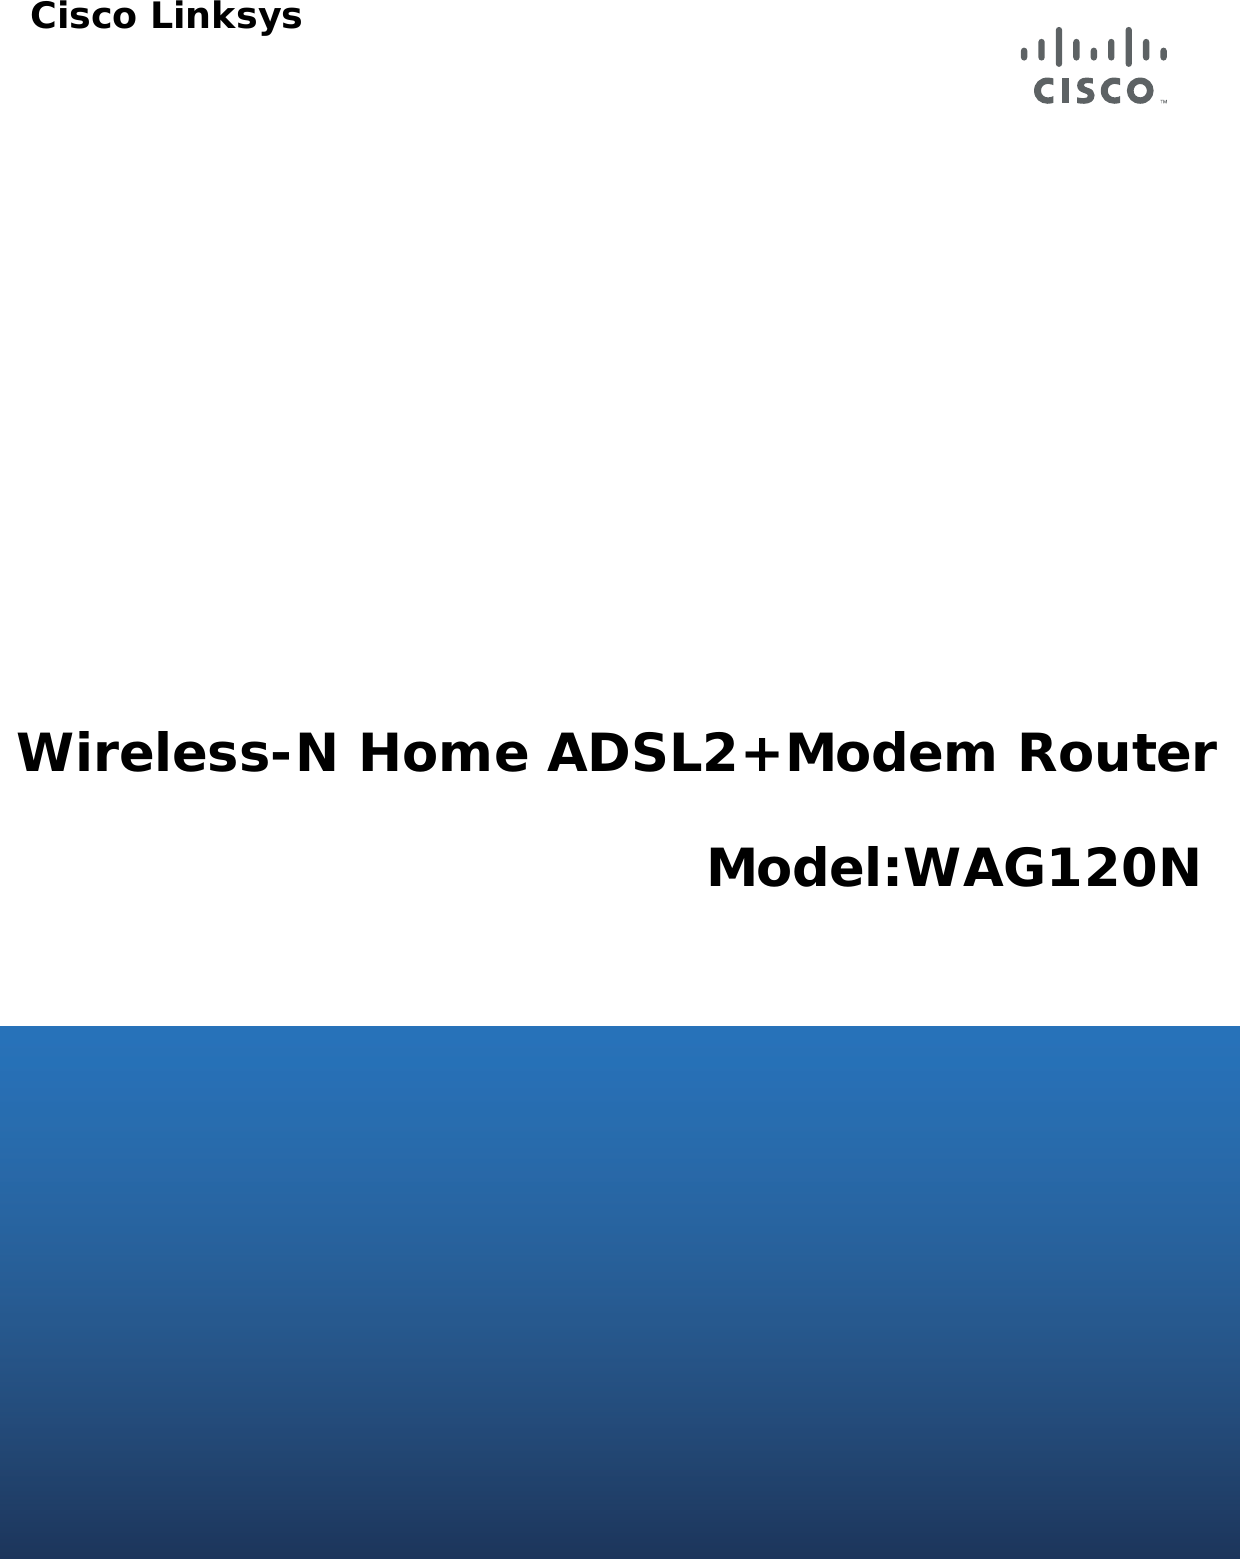 Wireless-N Home ADSL2+Modem RouterModel:WAG120NCisco Linksys